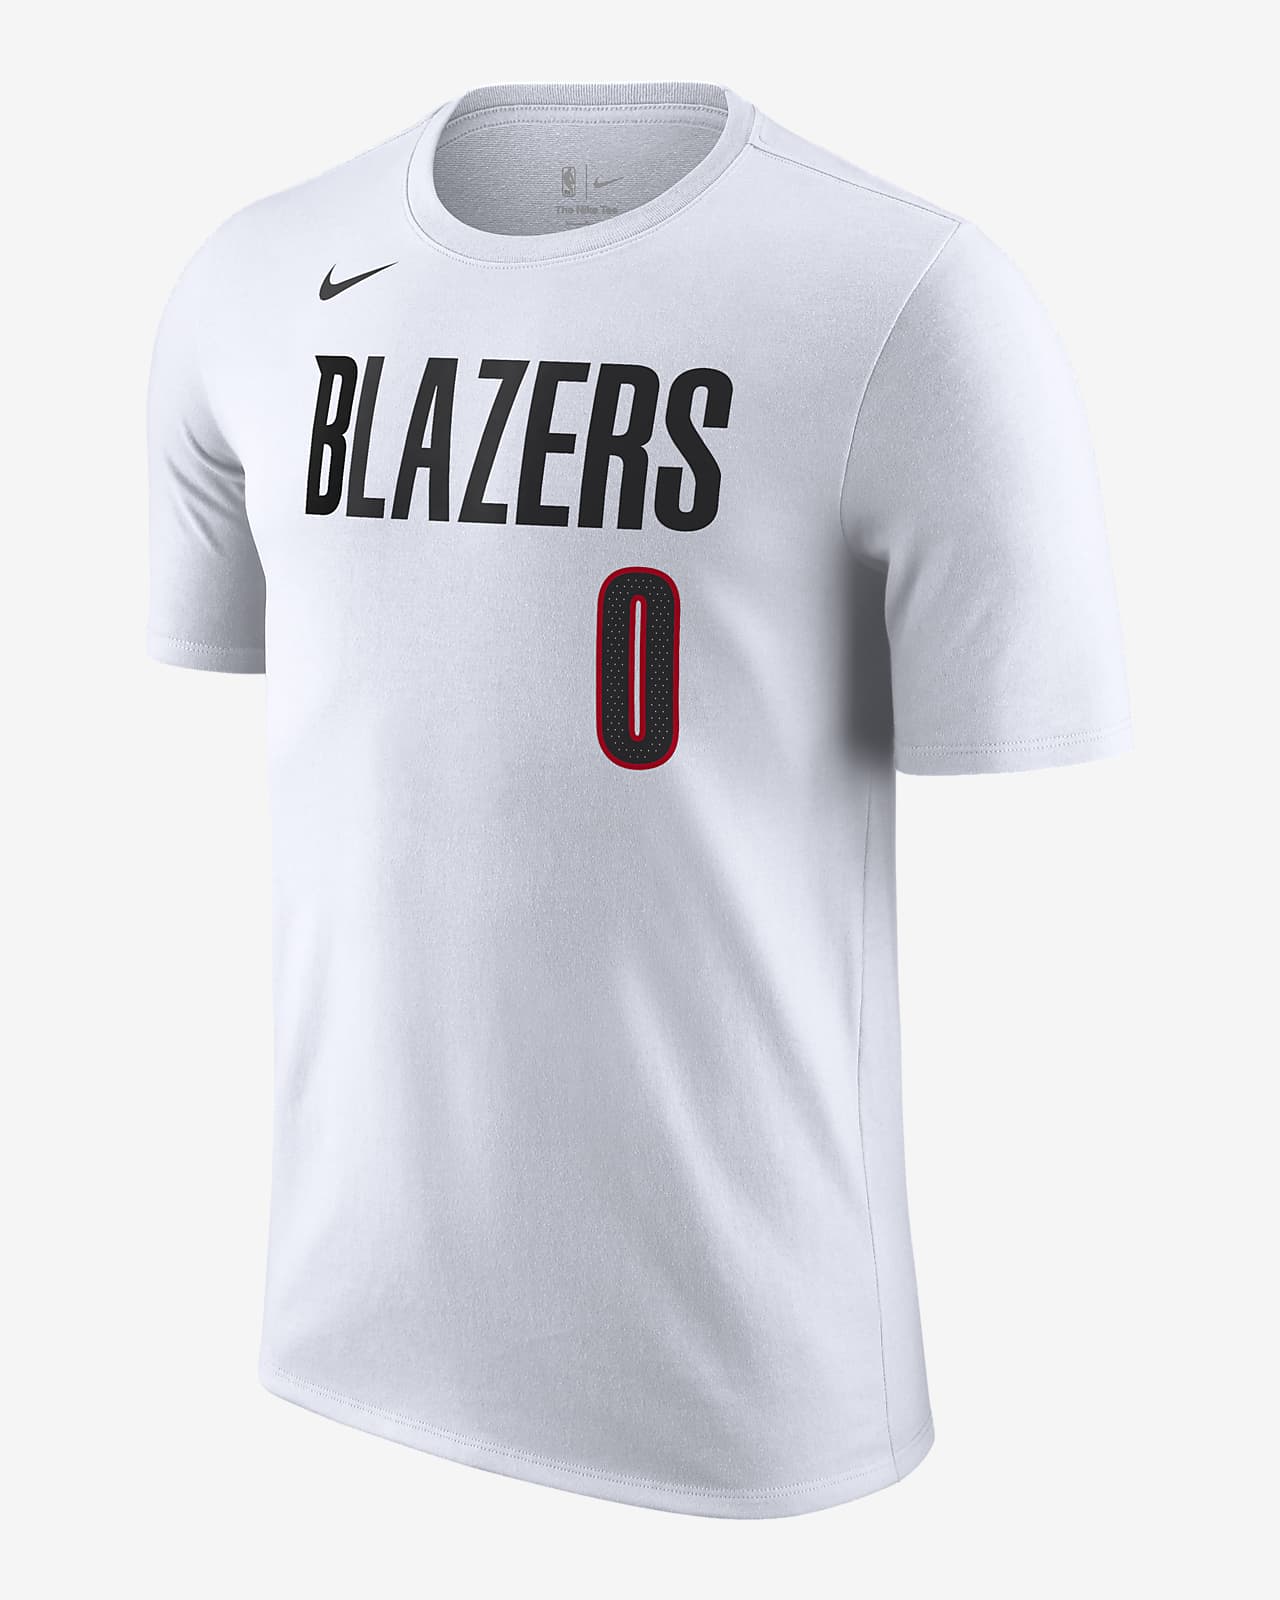 Playera Nike NBA para hombre Portland Trail Blazers